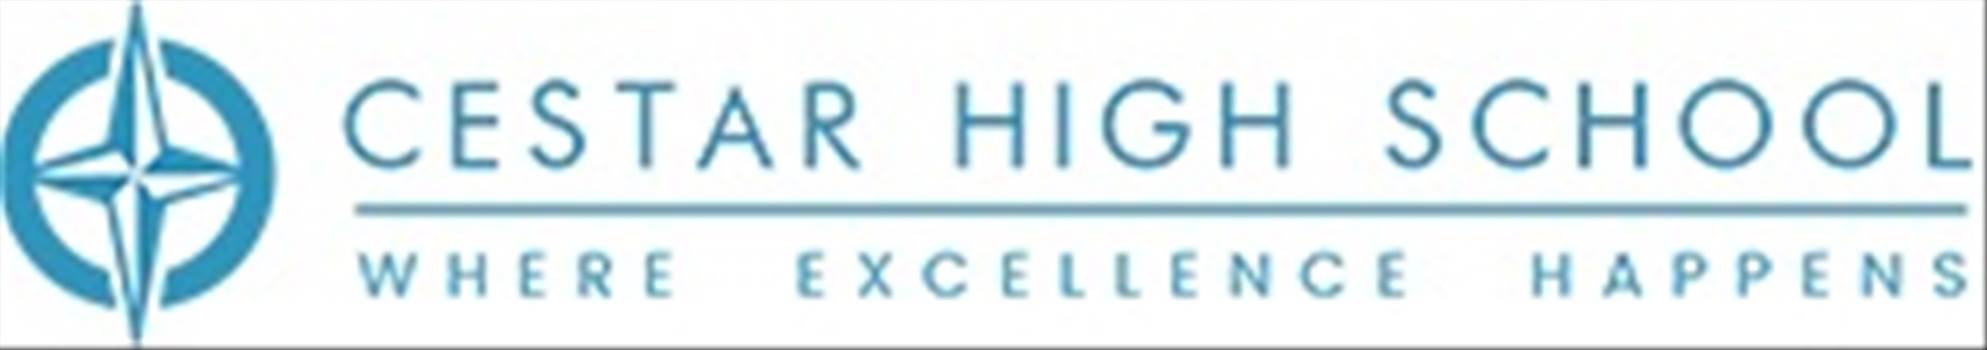 Cestar High School.jpg - Logo design for https://cestarhighschool.com/